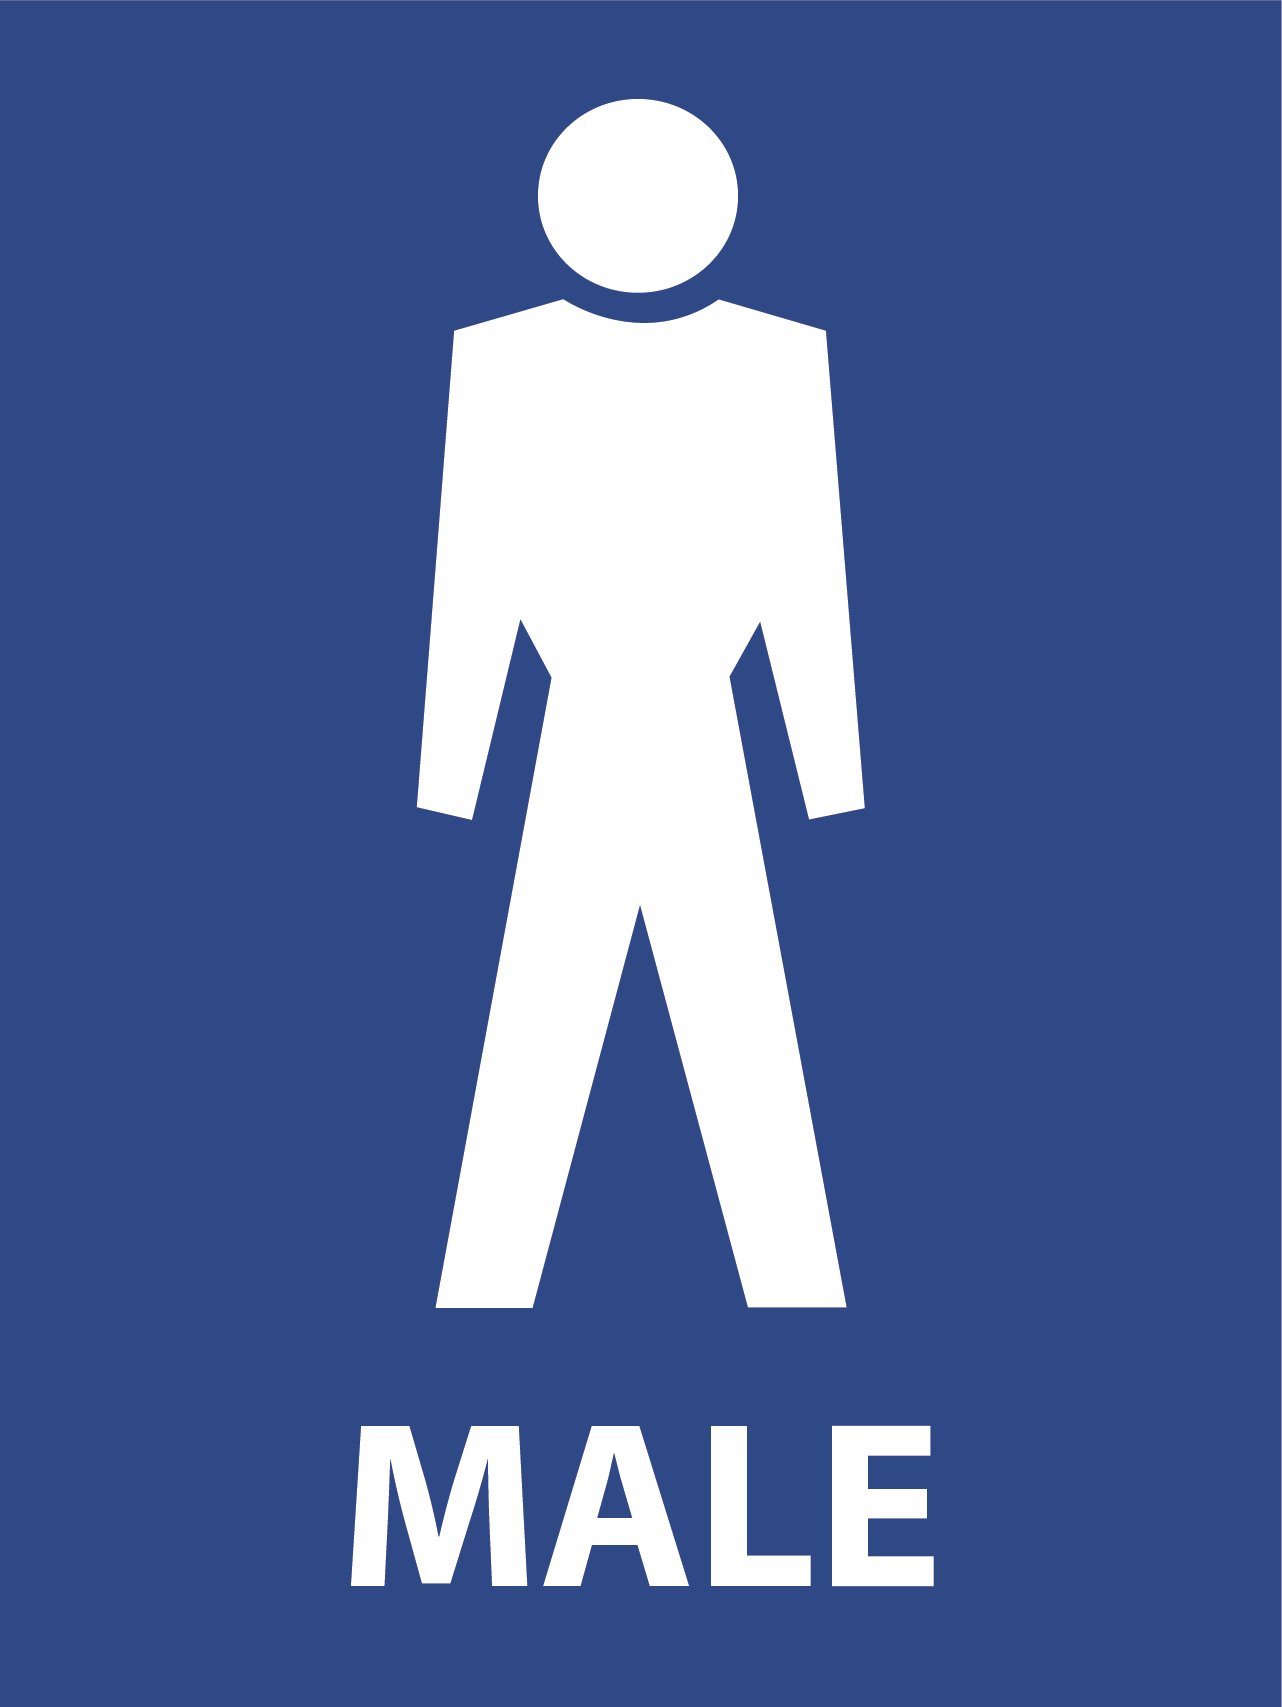 Symbolic Male Toilets - 600 x 450 - Metal